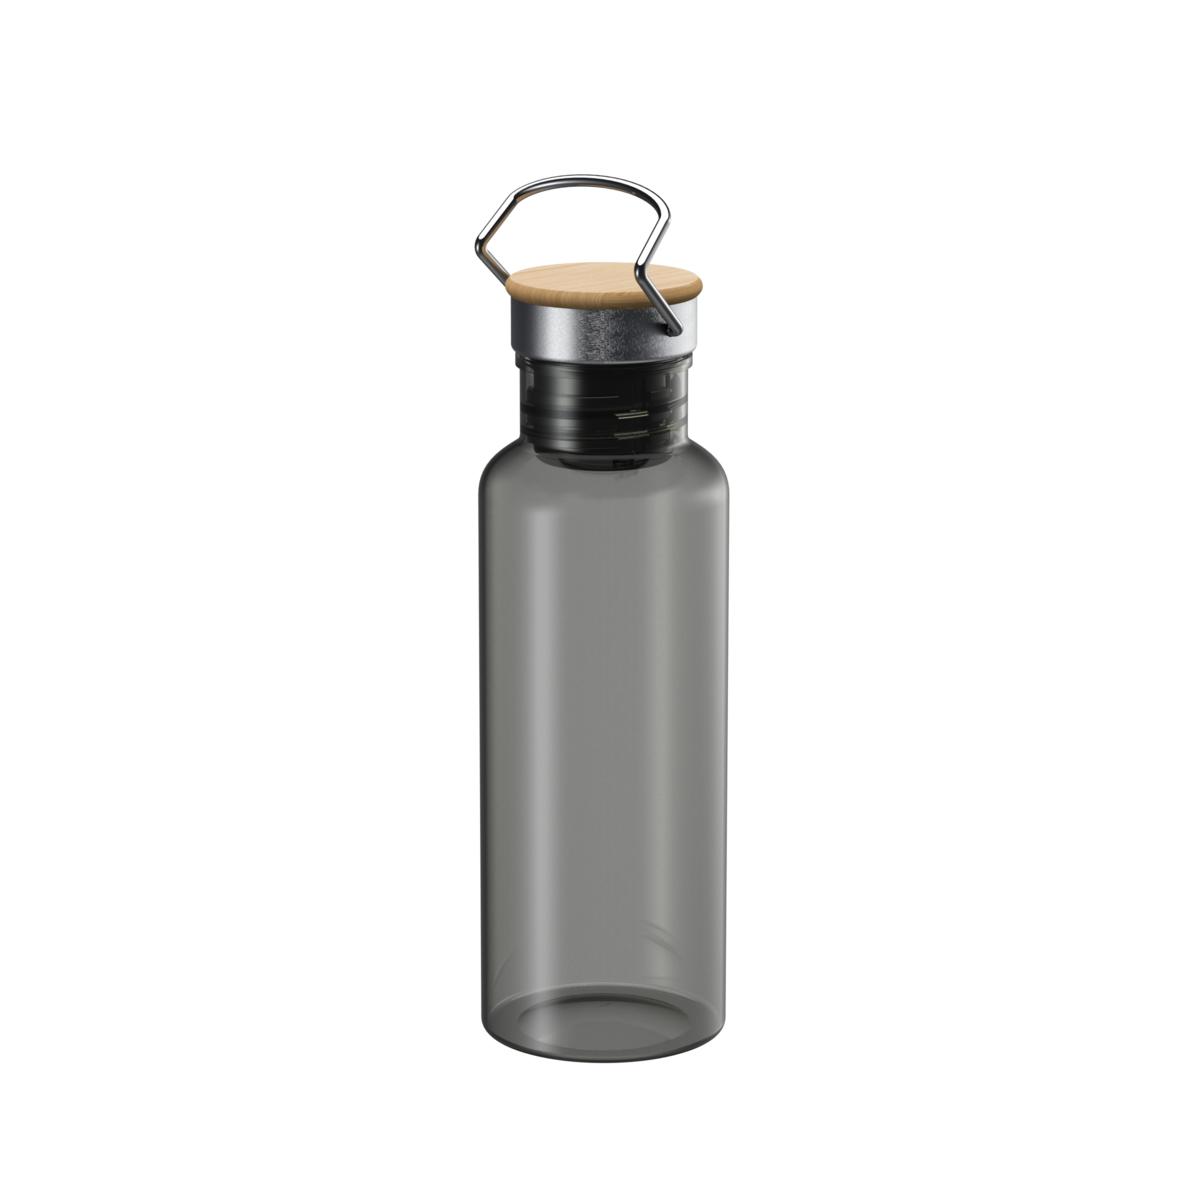 Water Bottle made of Tritan material, lightweight with a minimalist design - Bromborough